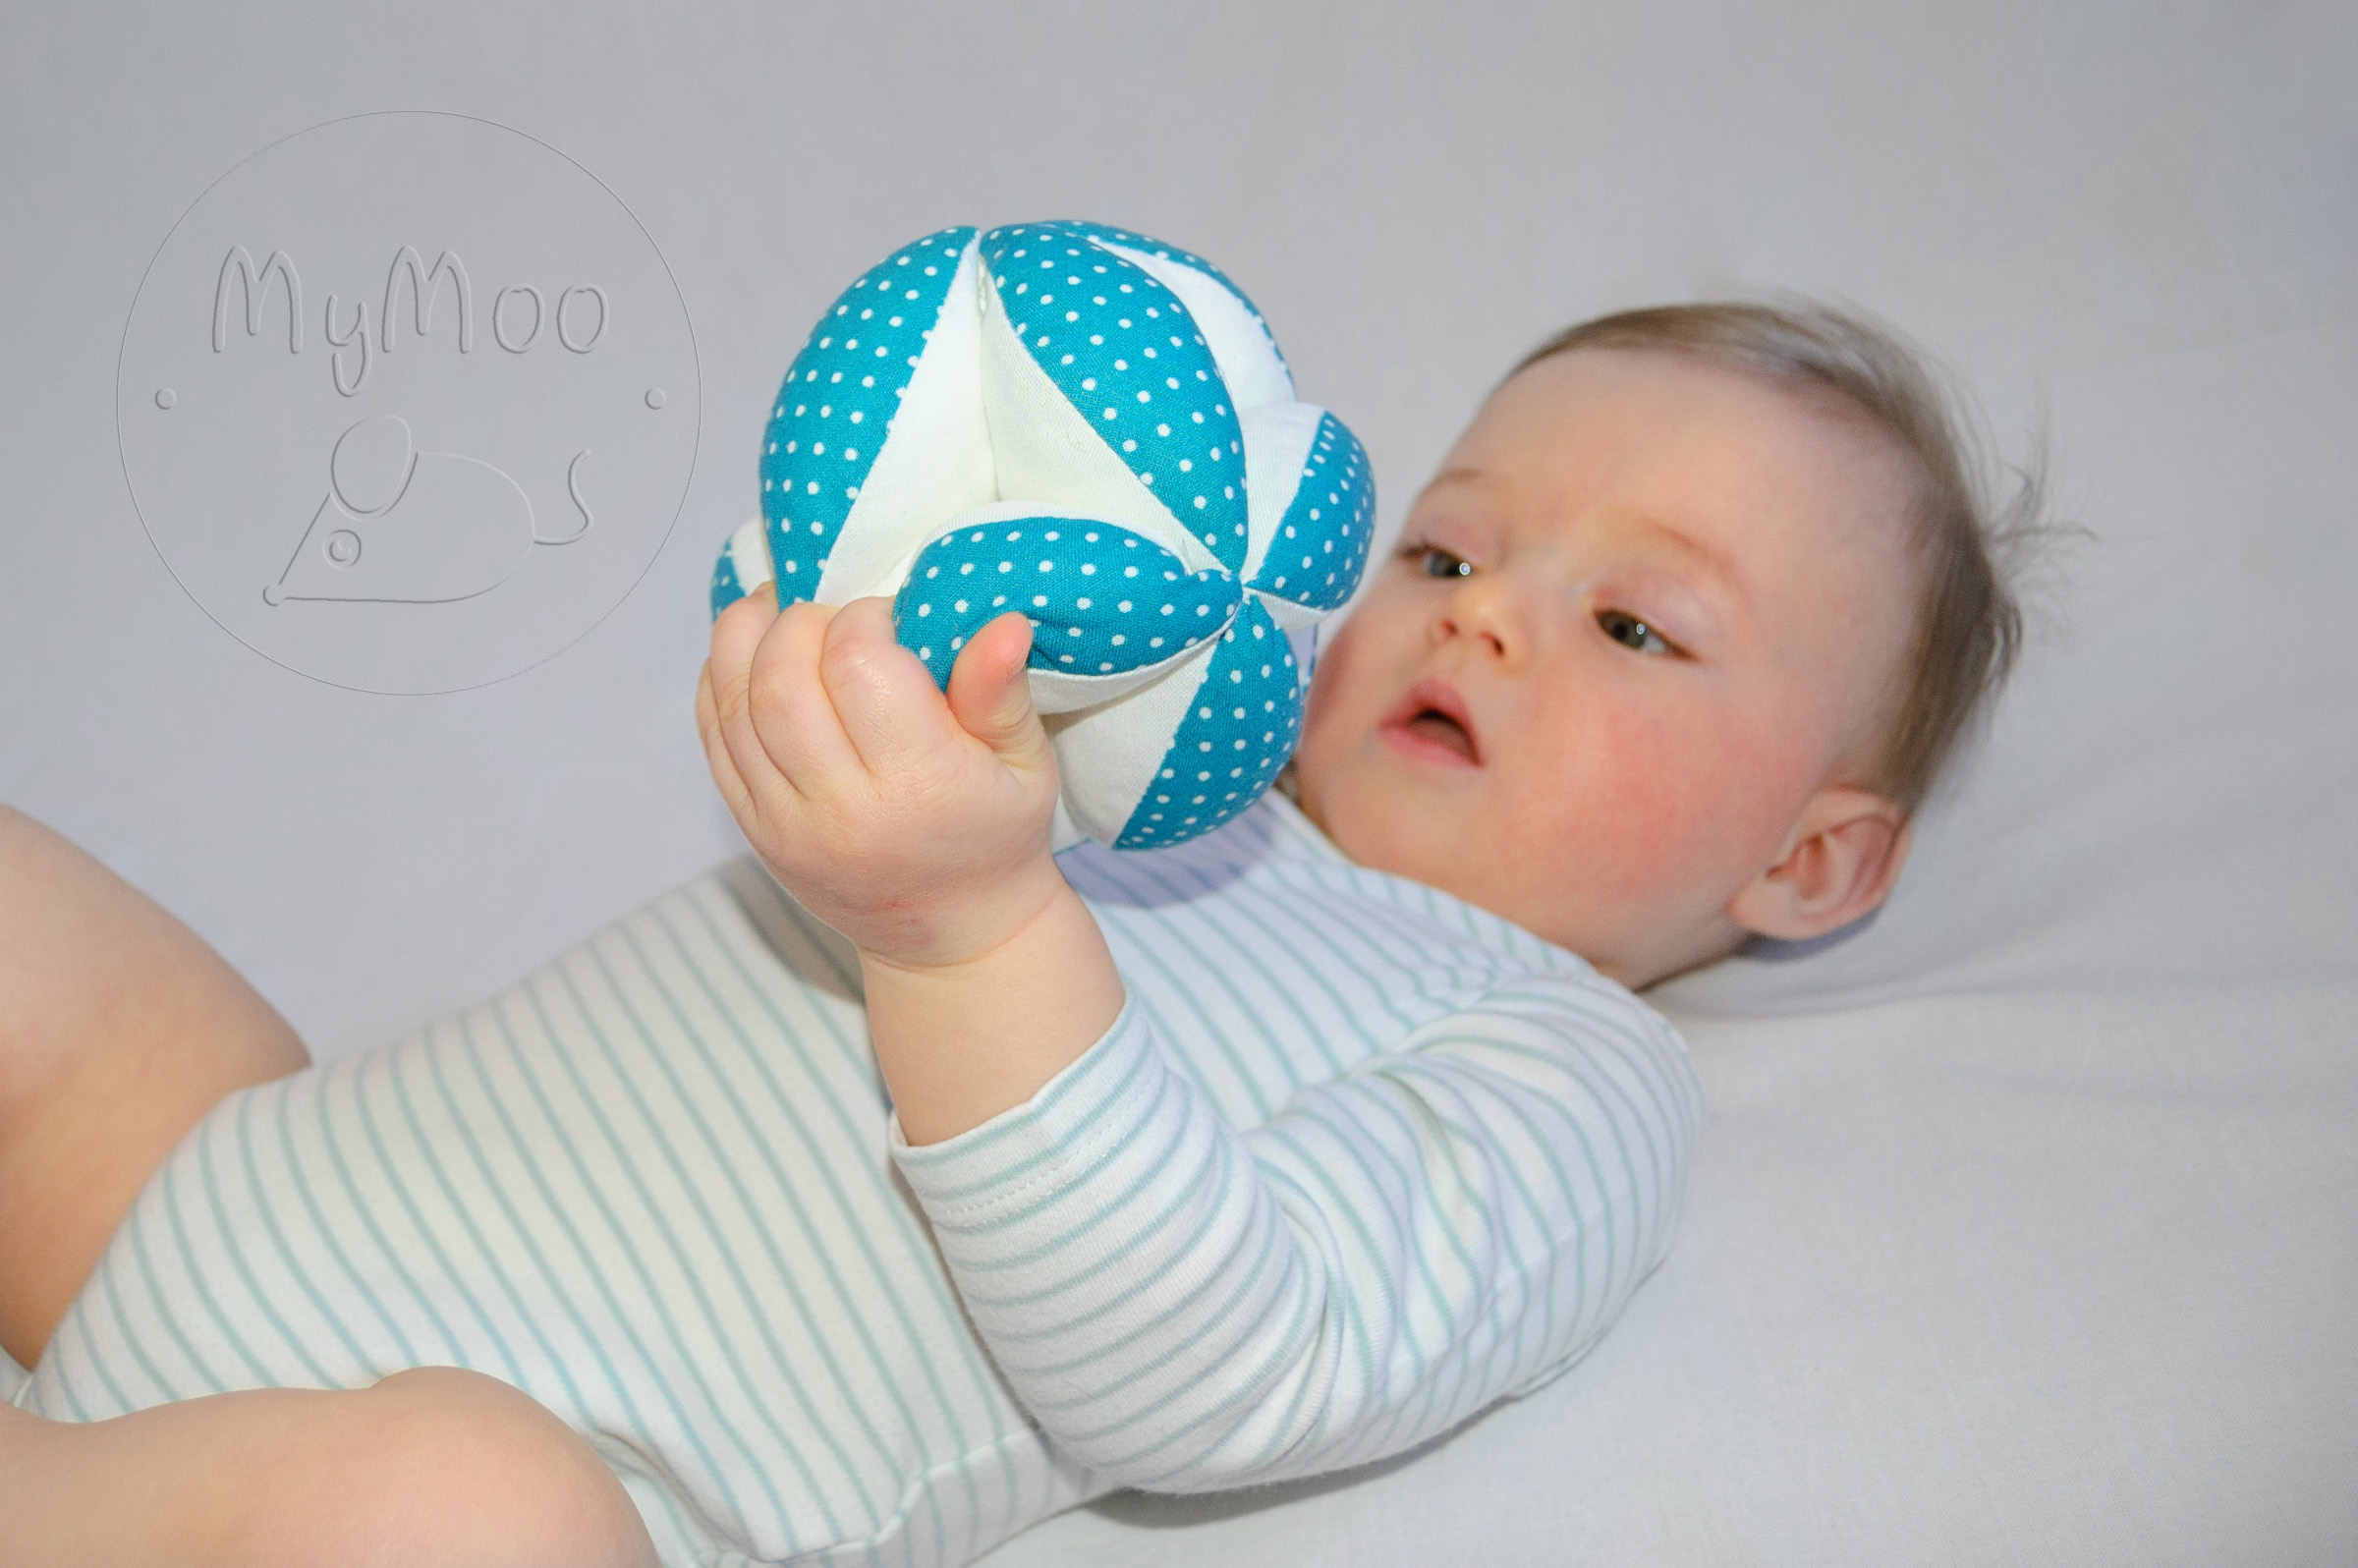 MyMoo Montessori Gripping Ball - Polka Dots/Turquoise,MyMoo Montessori Gripping Ball - Polka Dots/Turquoise